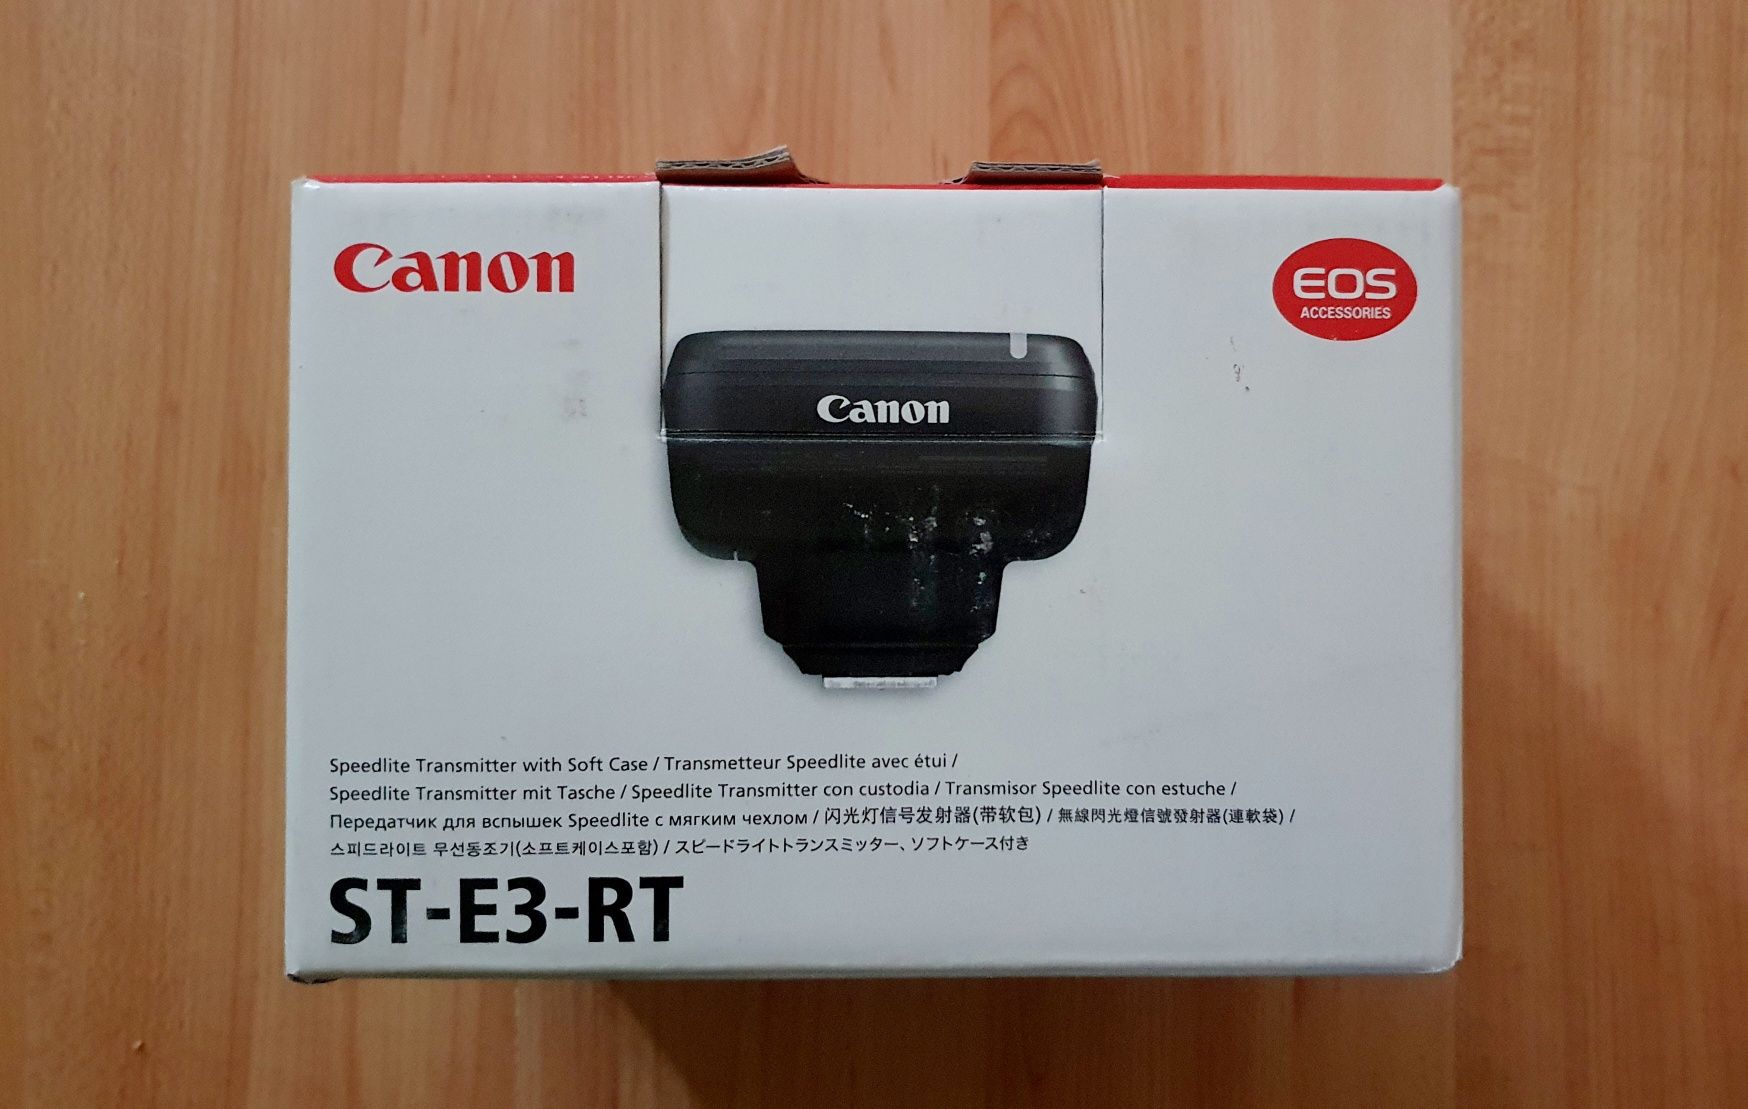 Canon ST-E3-RT wyzwalacz radiowy